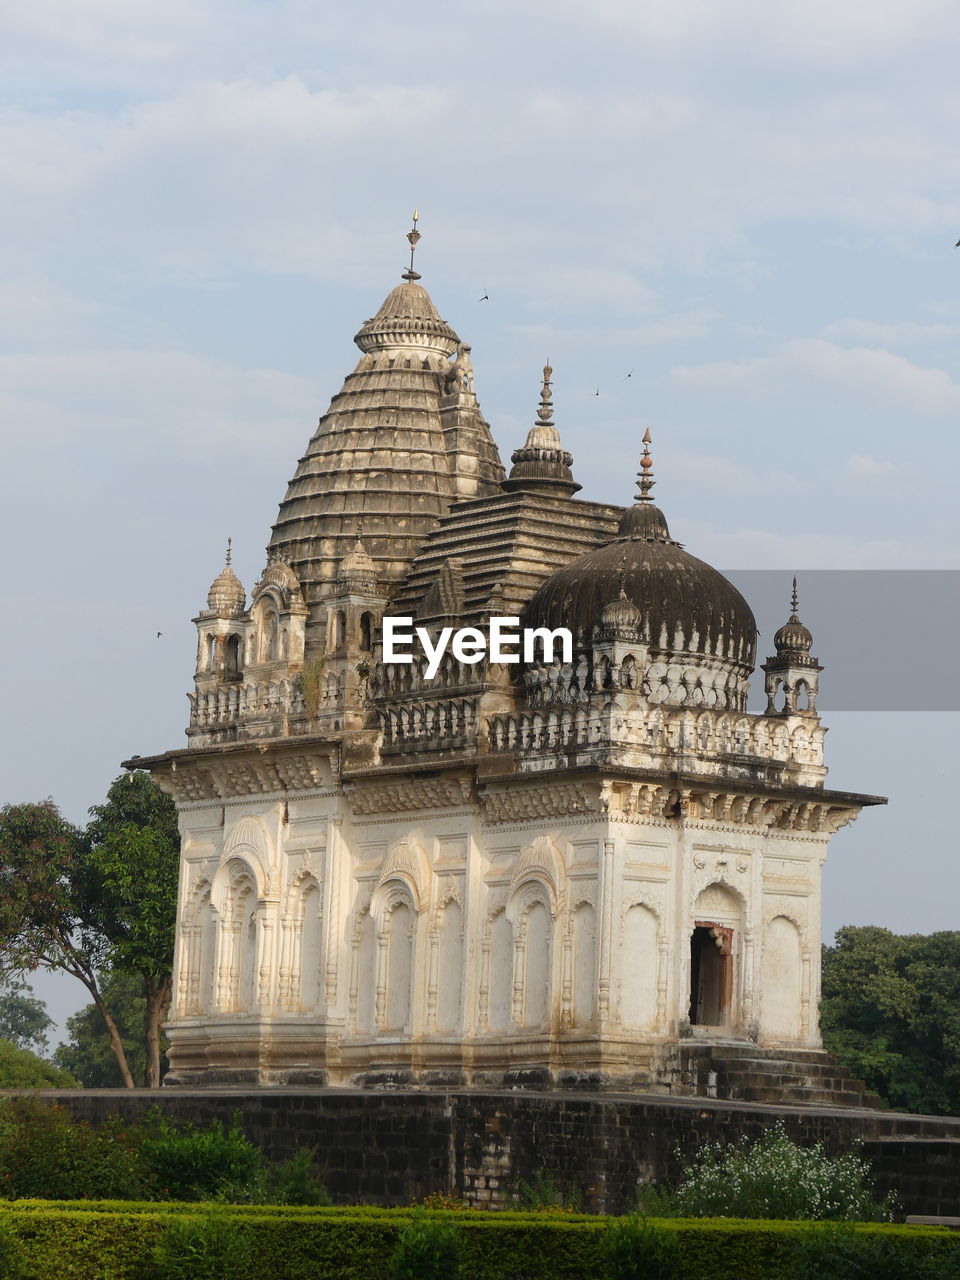 Pratapeshwar temple, khajuraho, india 2019